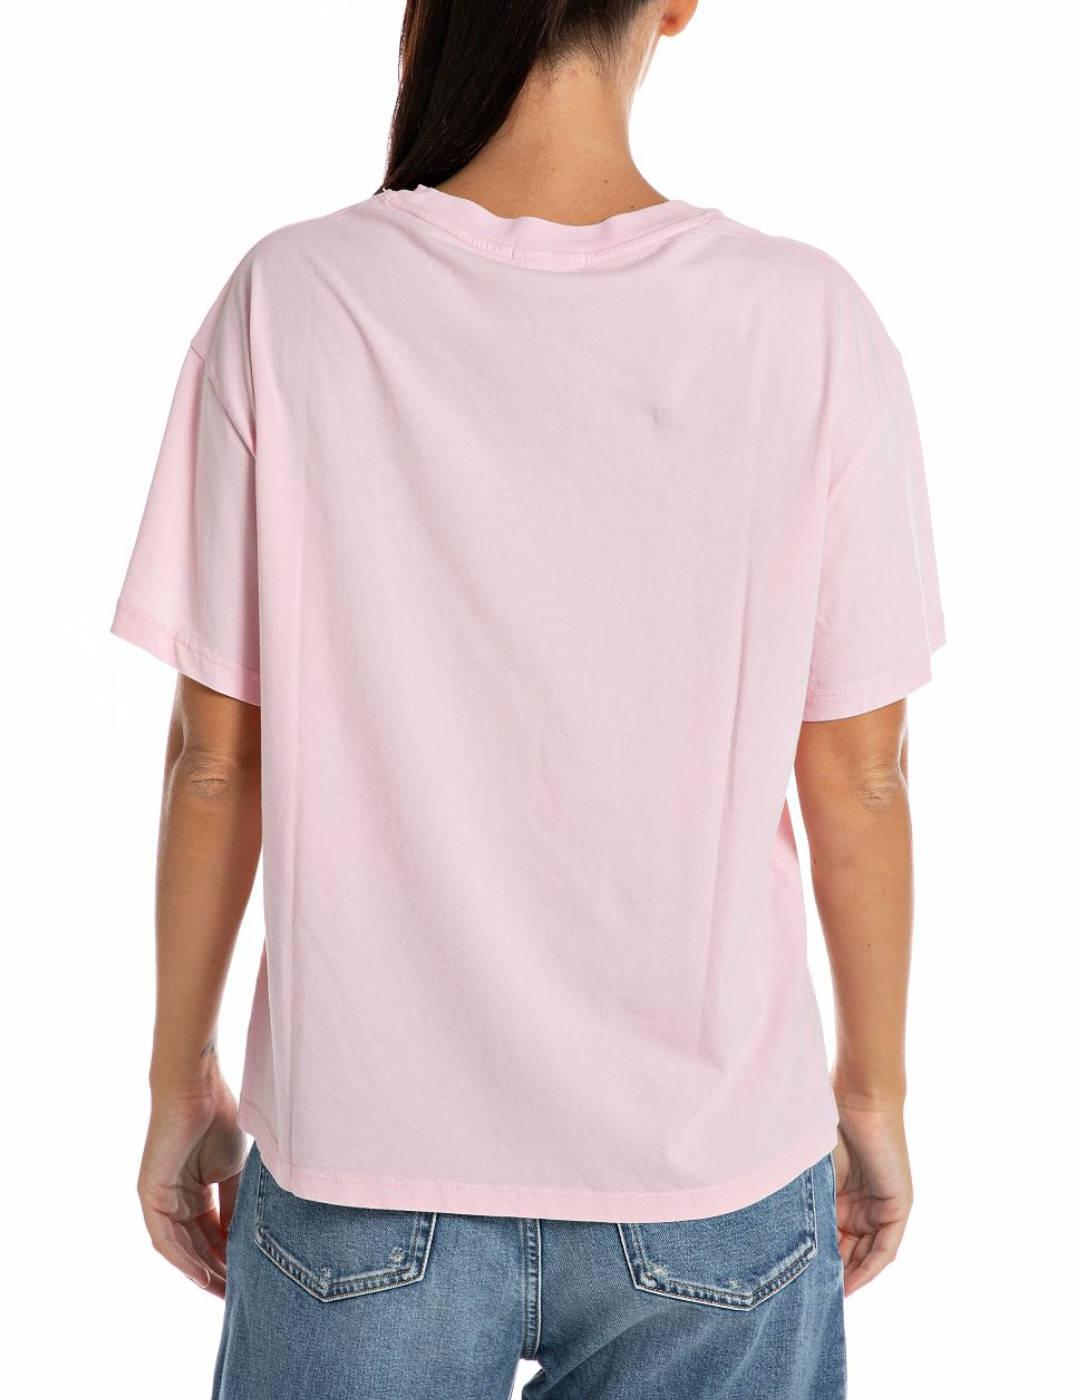 Camiseta Replay rosa corte Regular manga corta para mujer